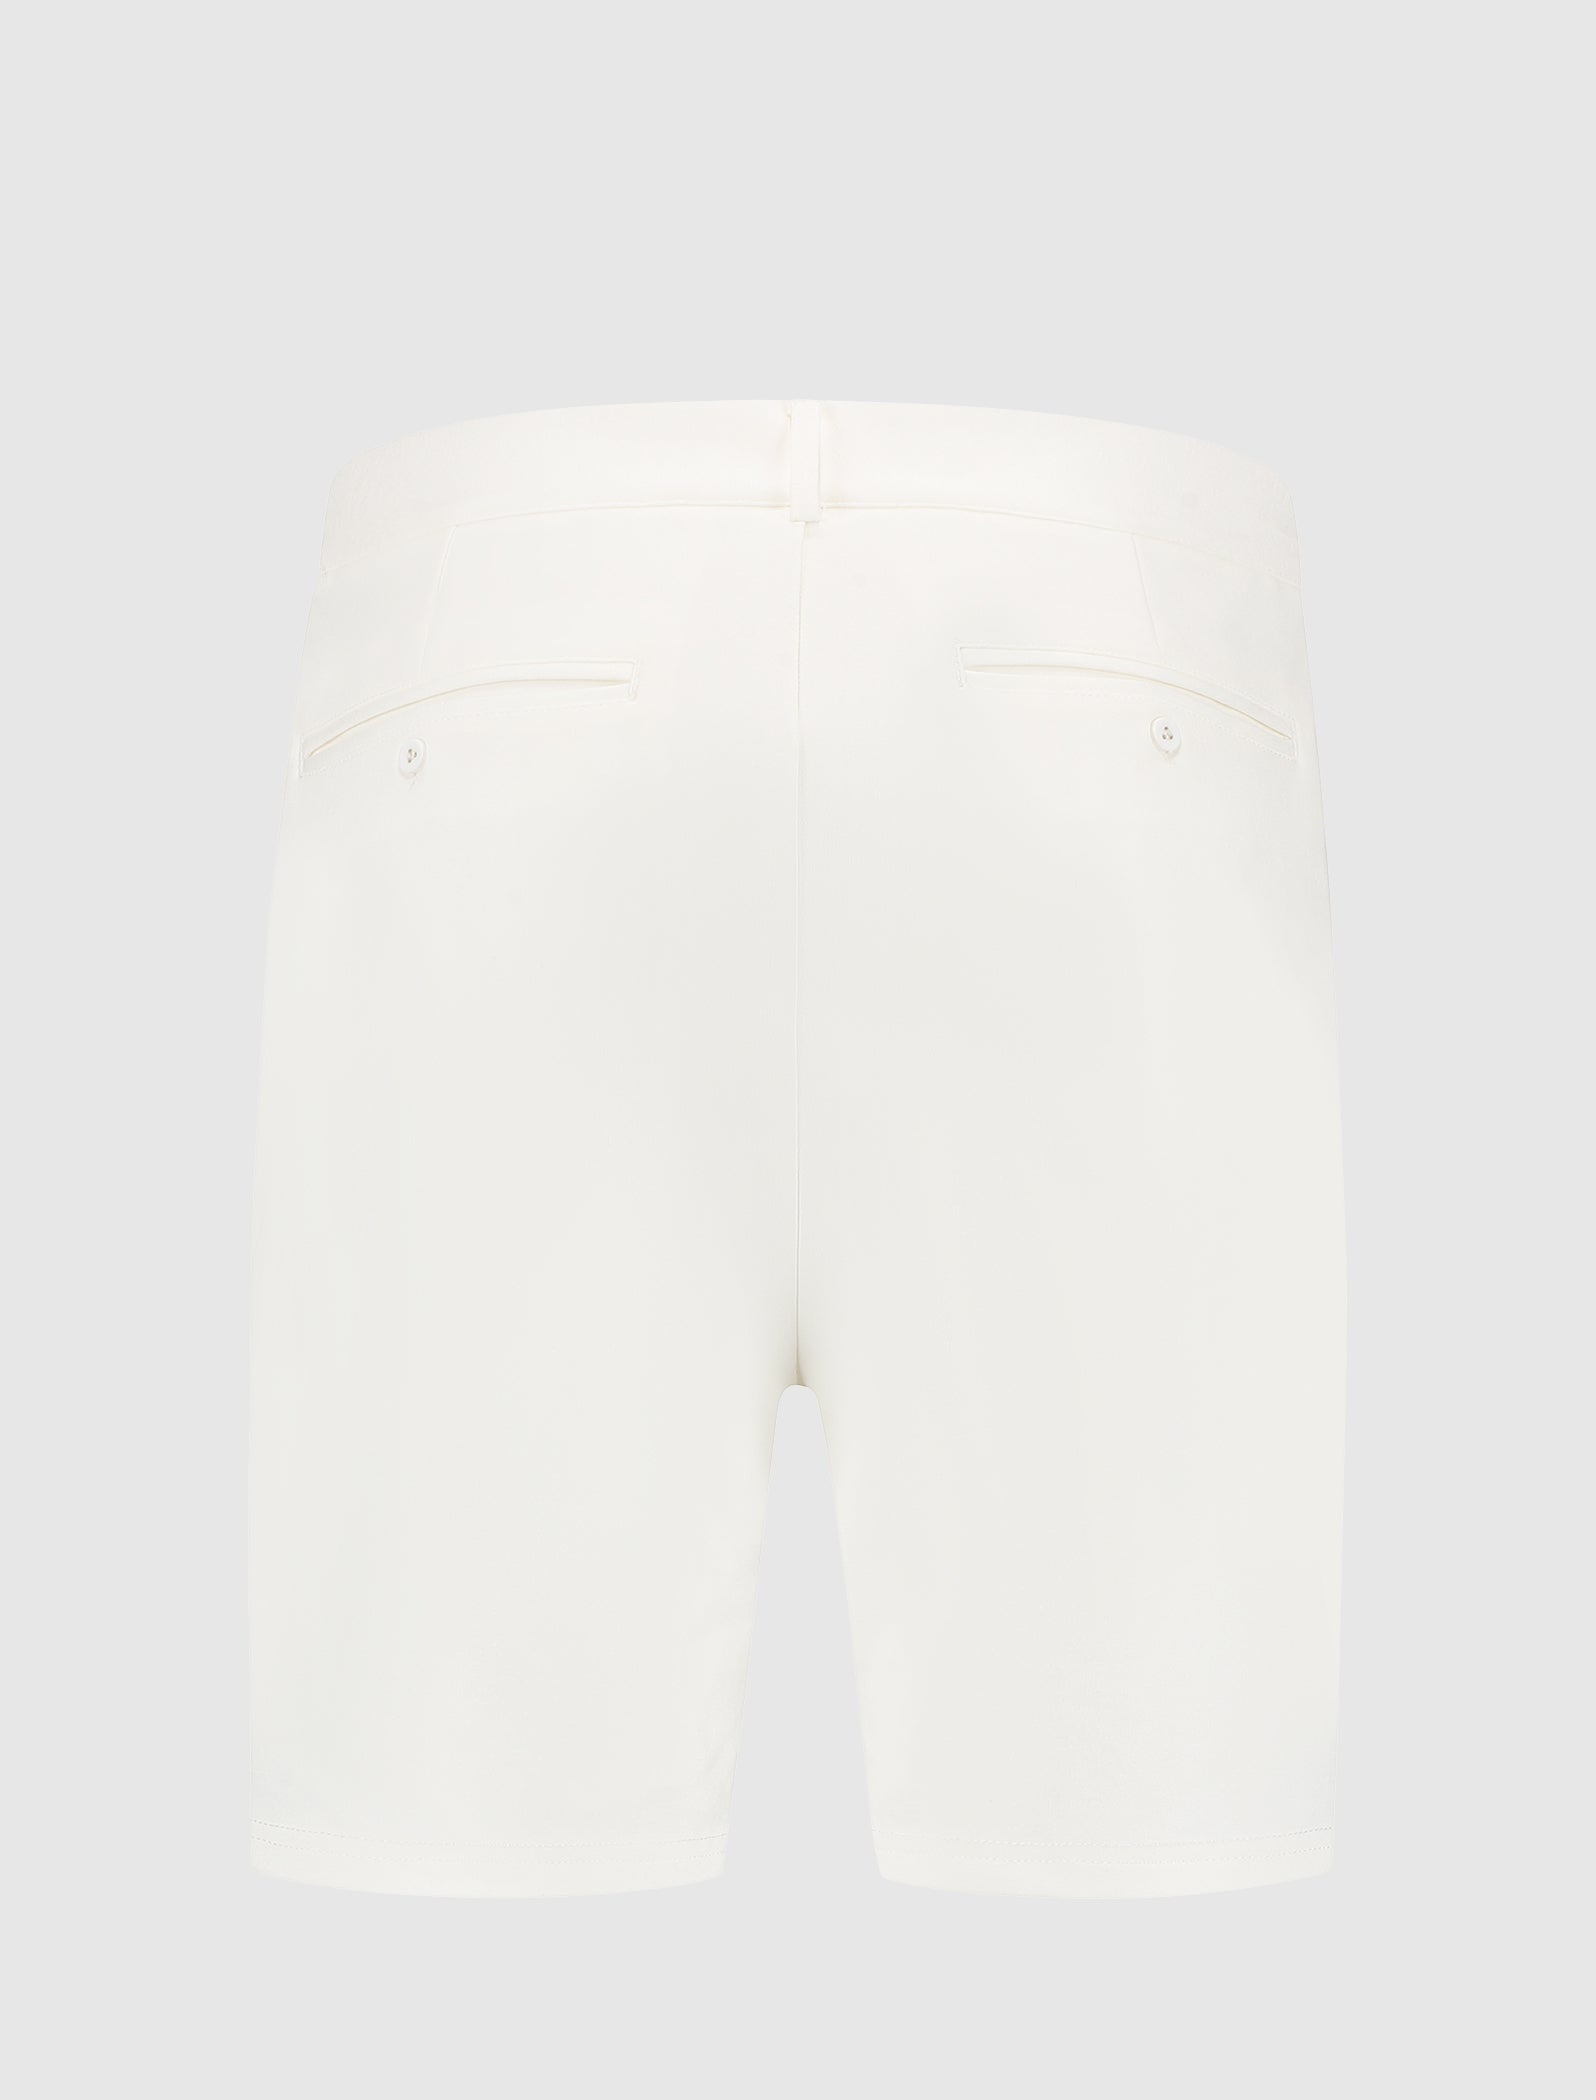 Punta Shorts | Off White